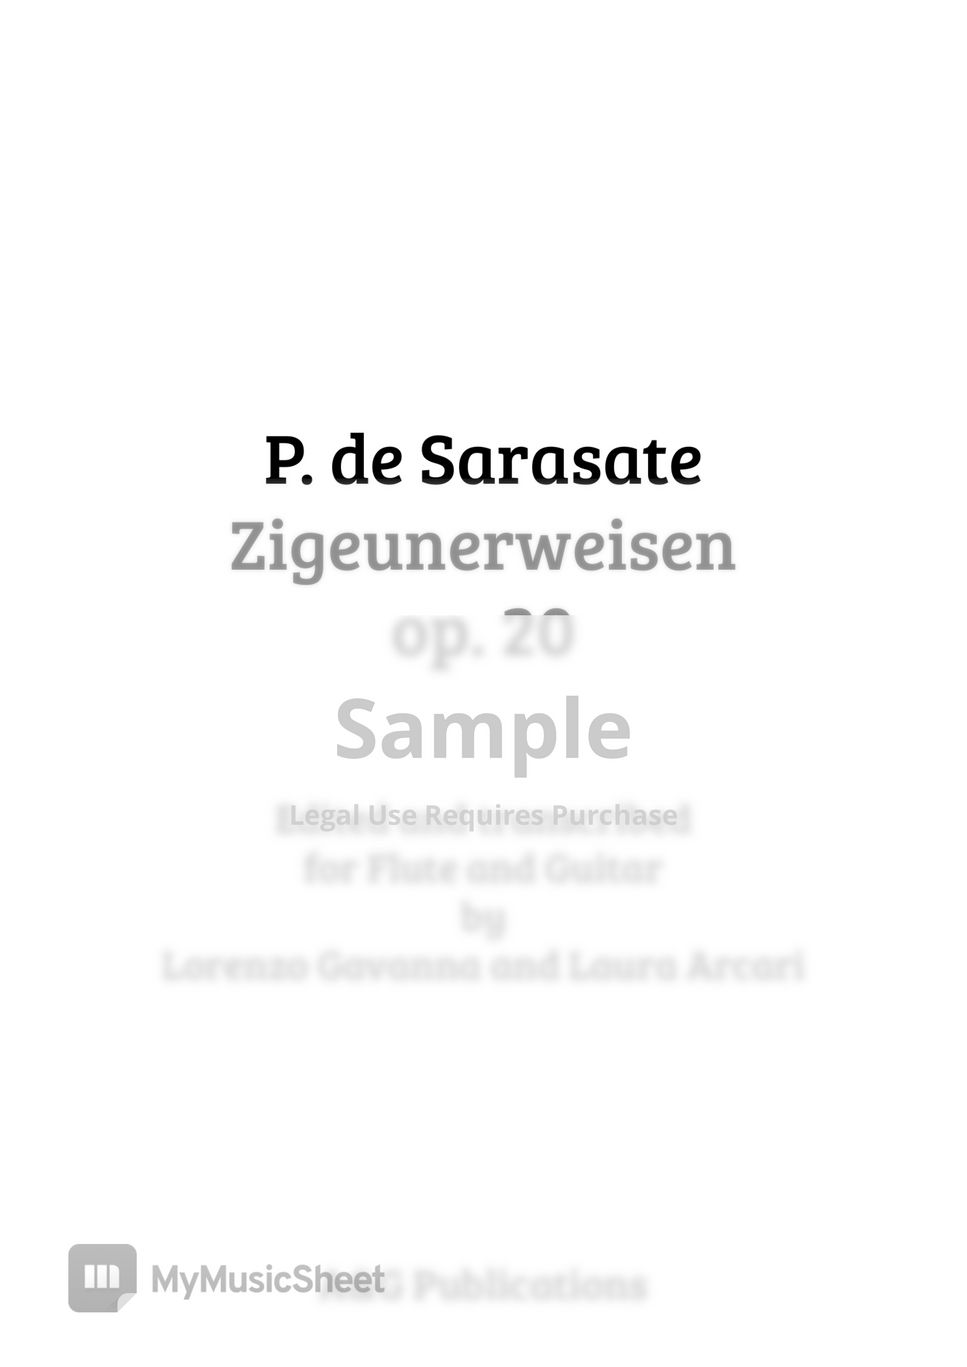 Pablo de Sarasate - Zigeunerweisen, op.20 by Lorenzo Gavanna (Flute), Laura Arcari (Guitar)